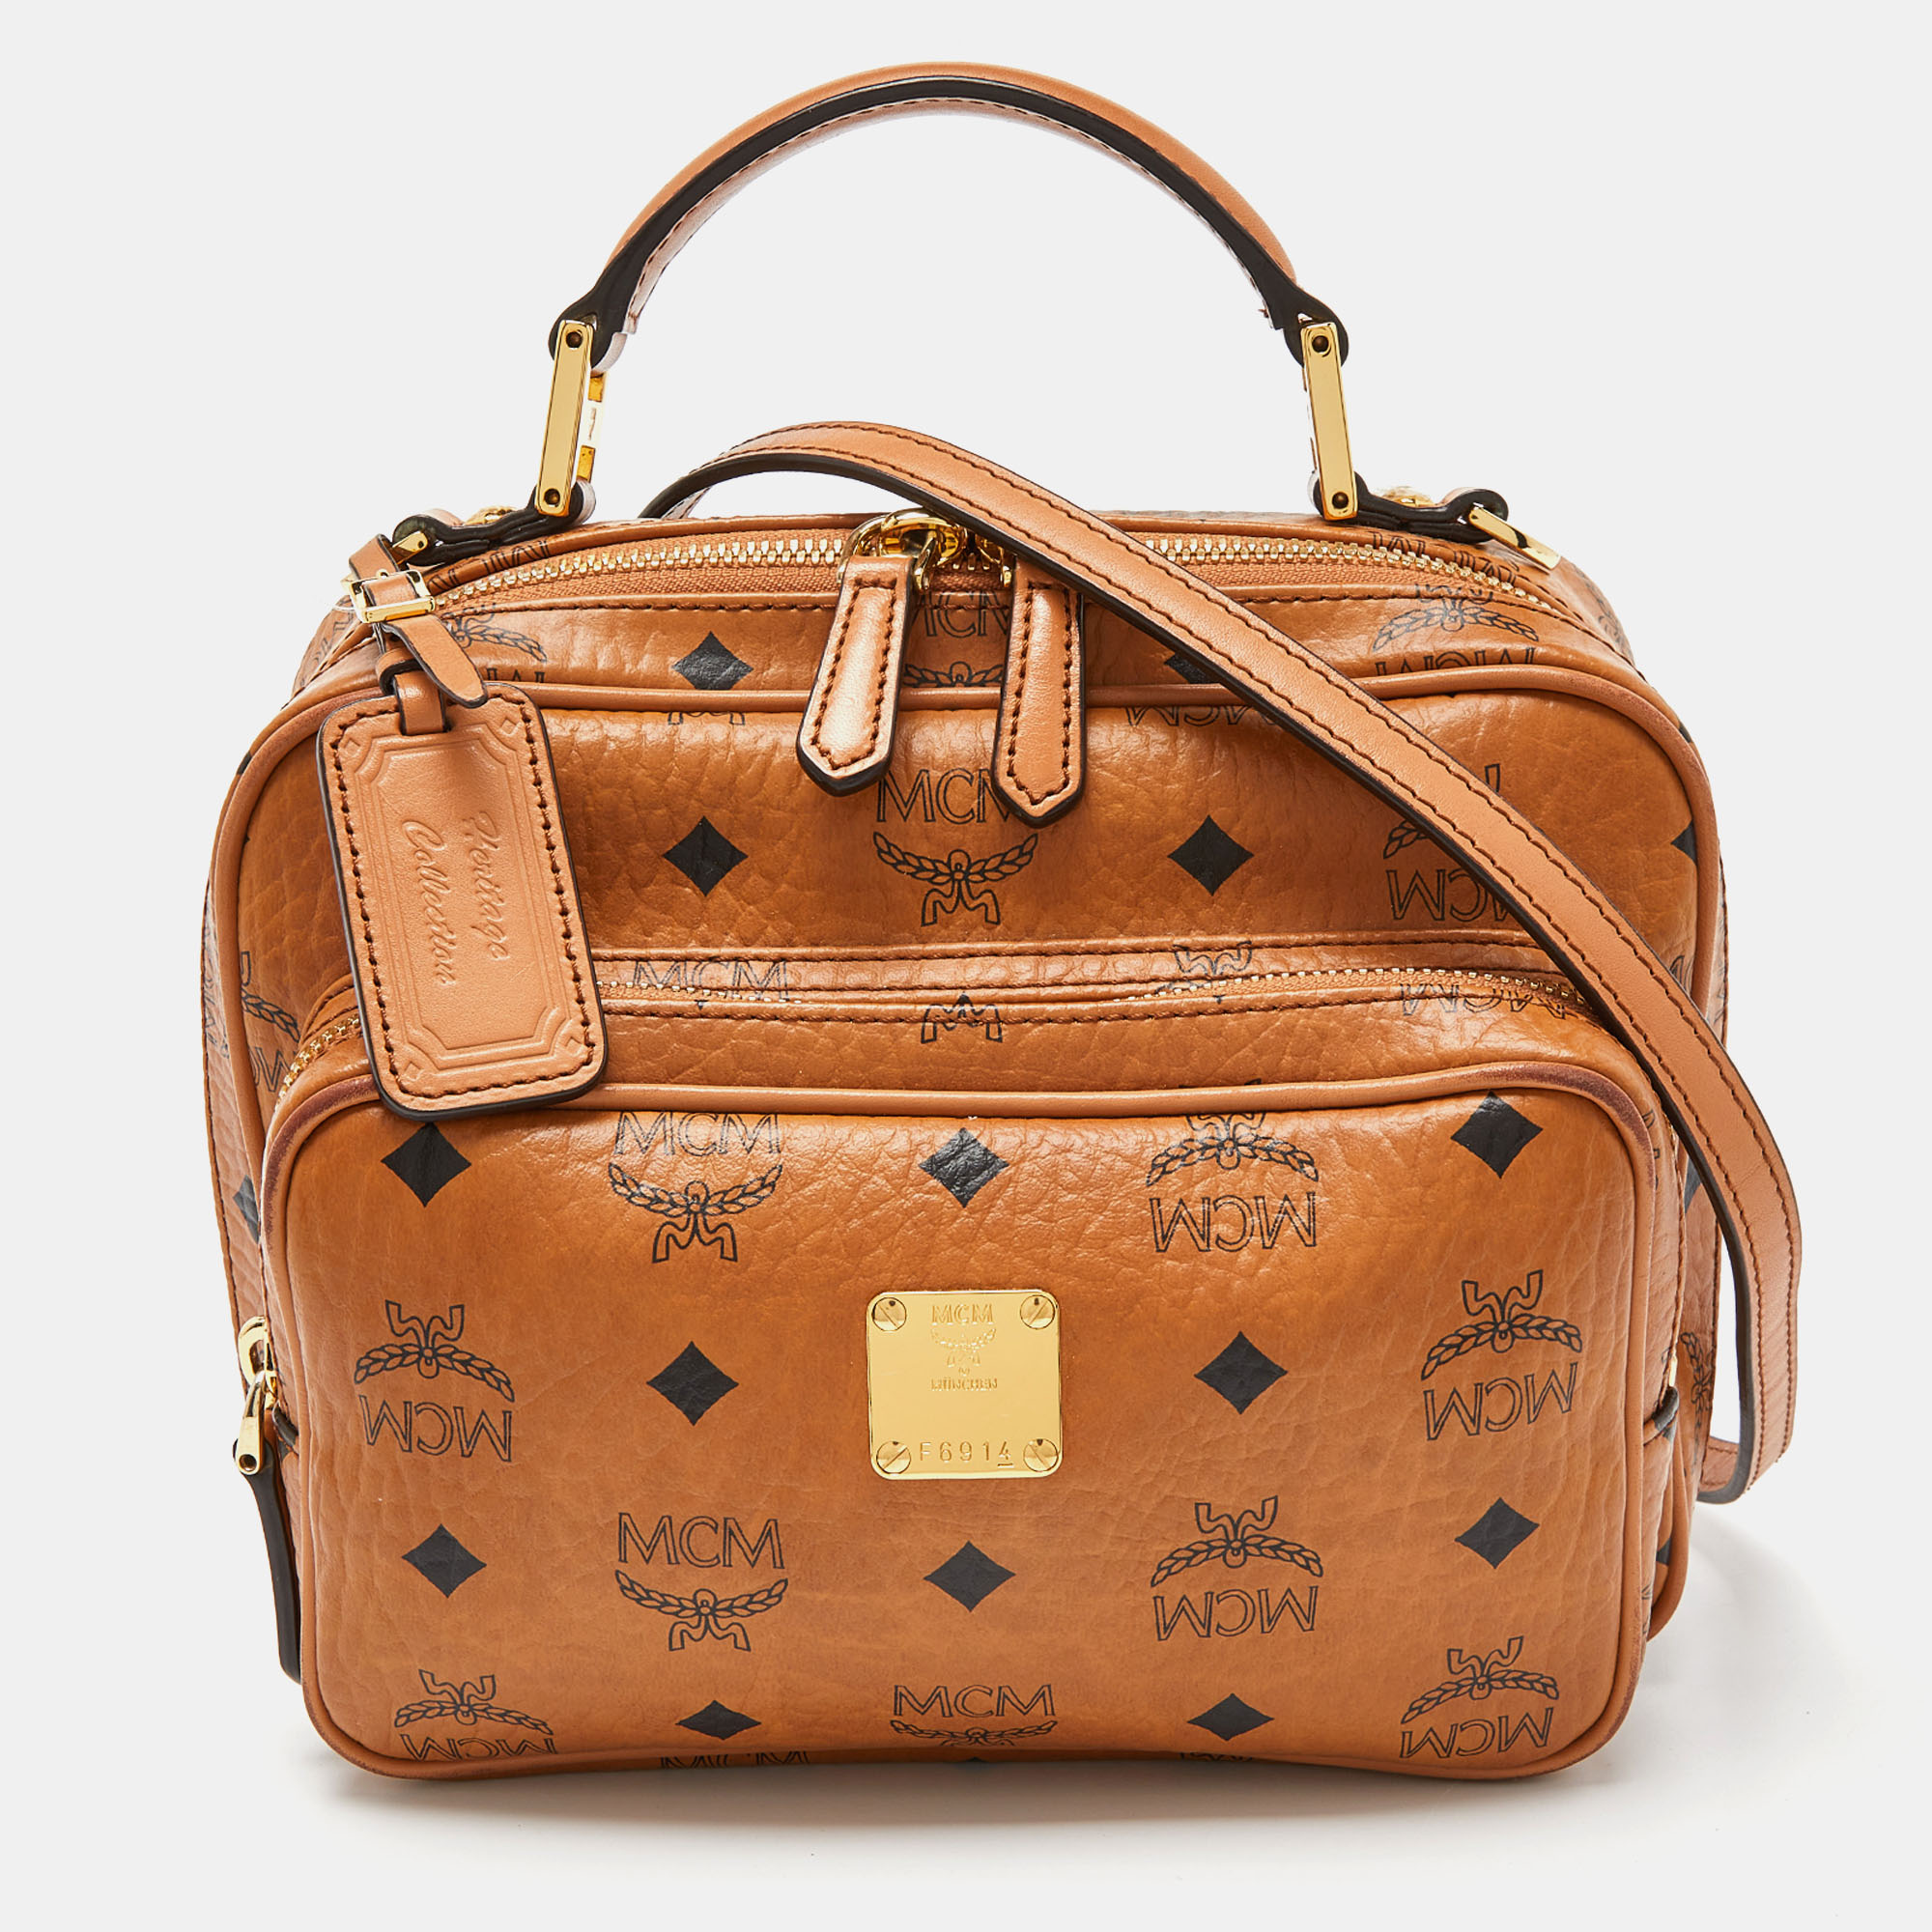 MCM Pre-Owned Designer Handbags in Women's Bags 